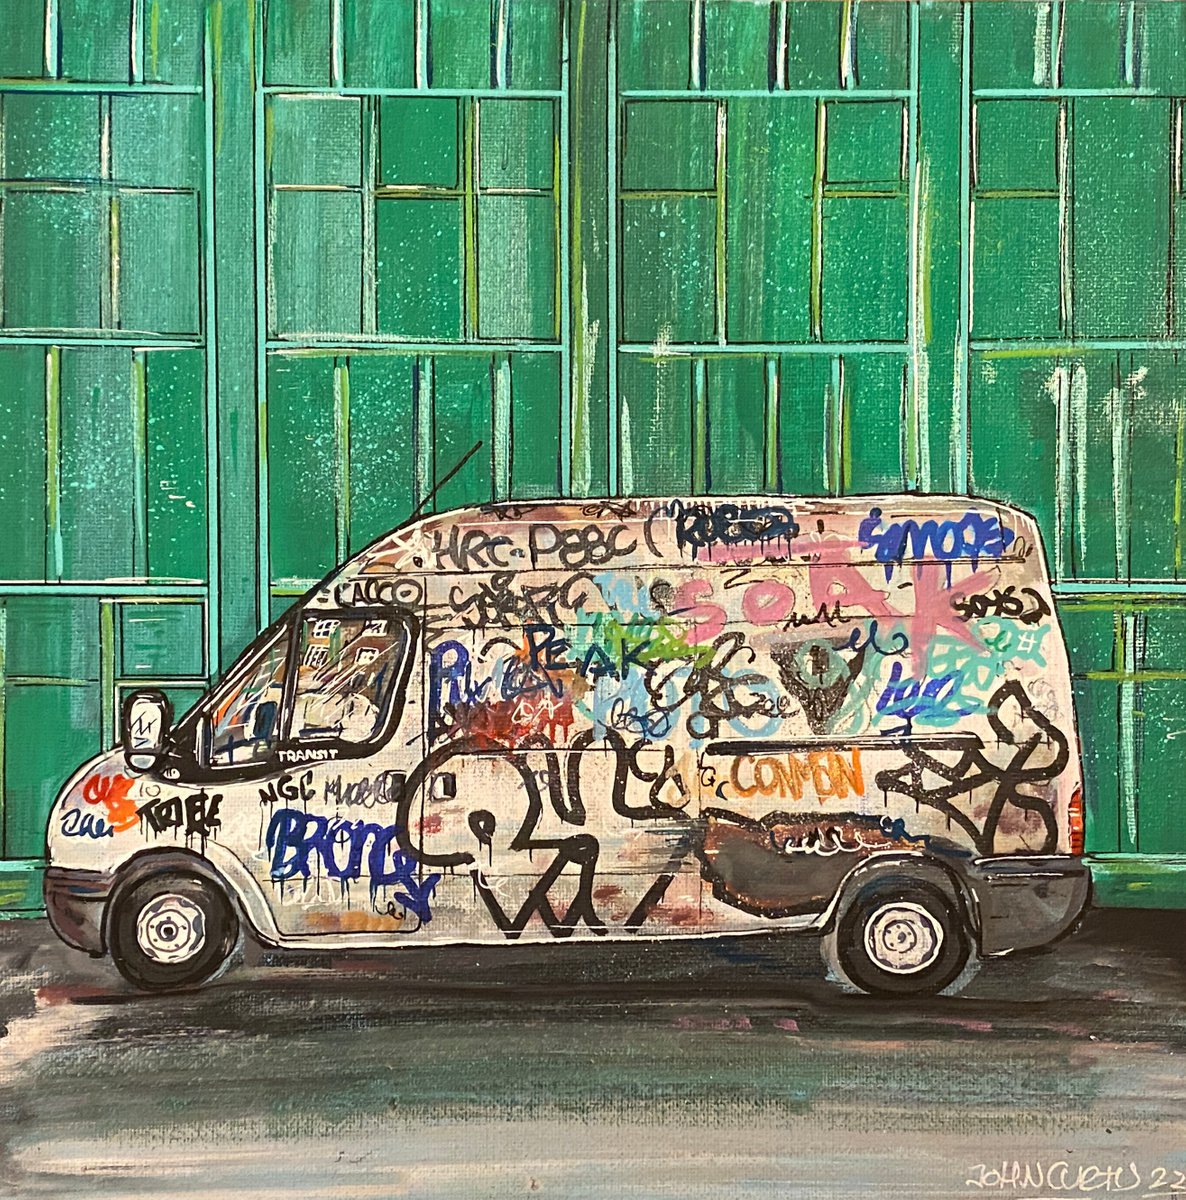 The Van - Original on canvas board by John Curtis